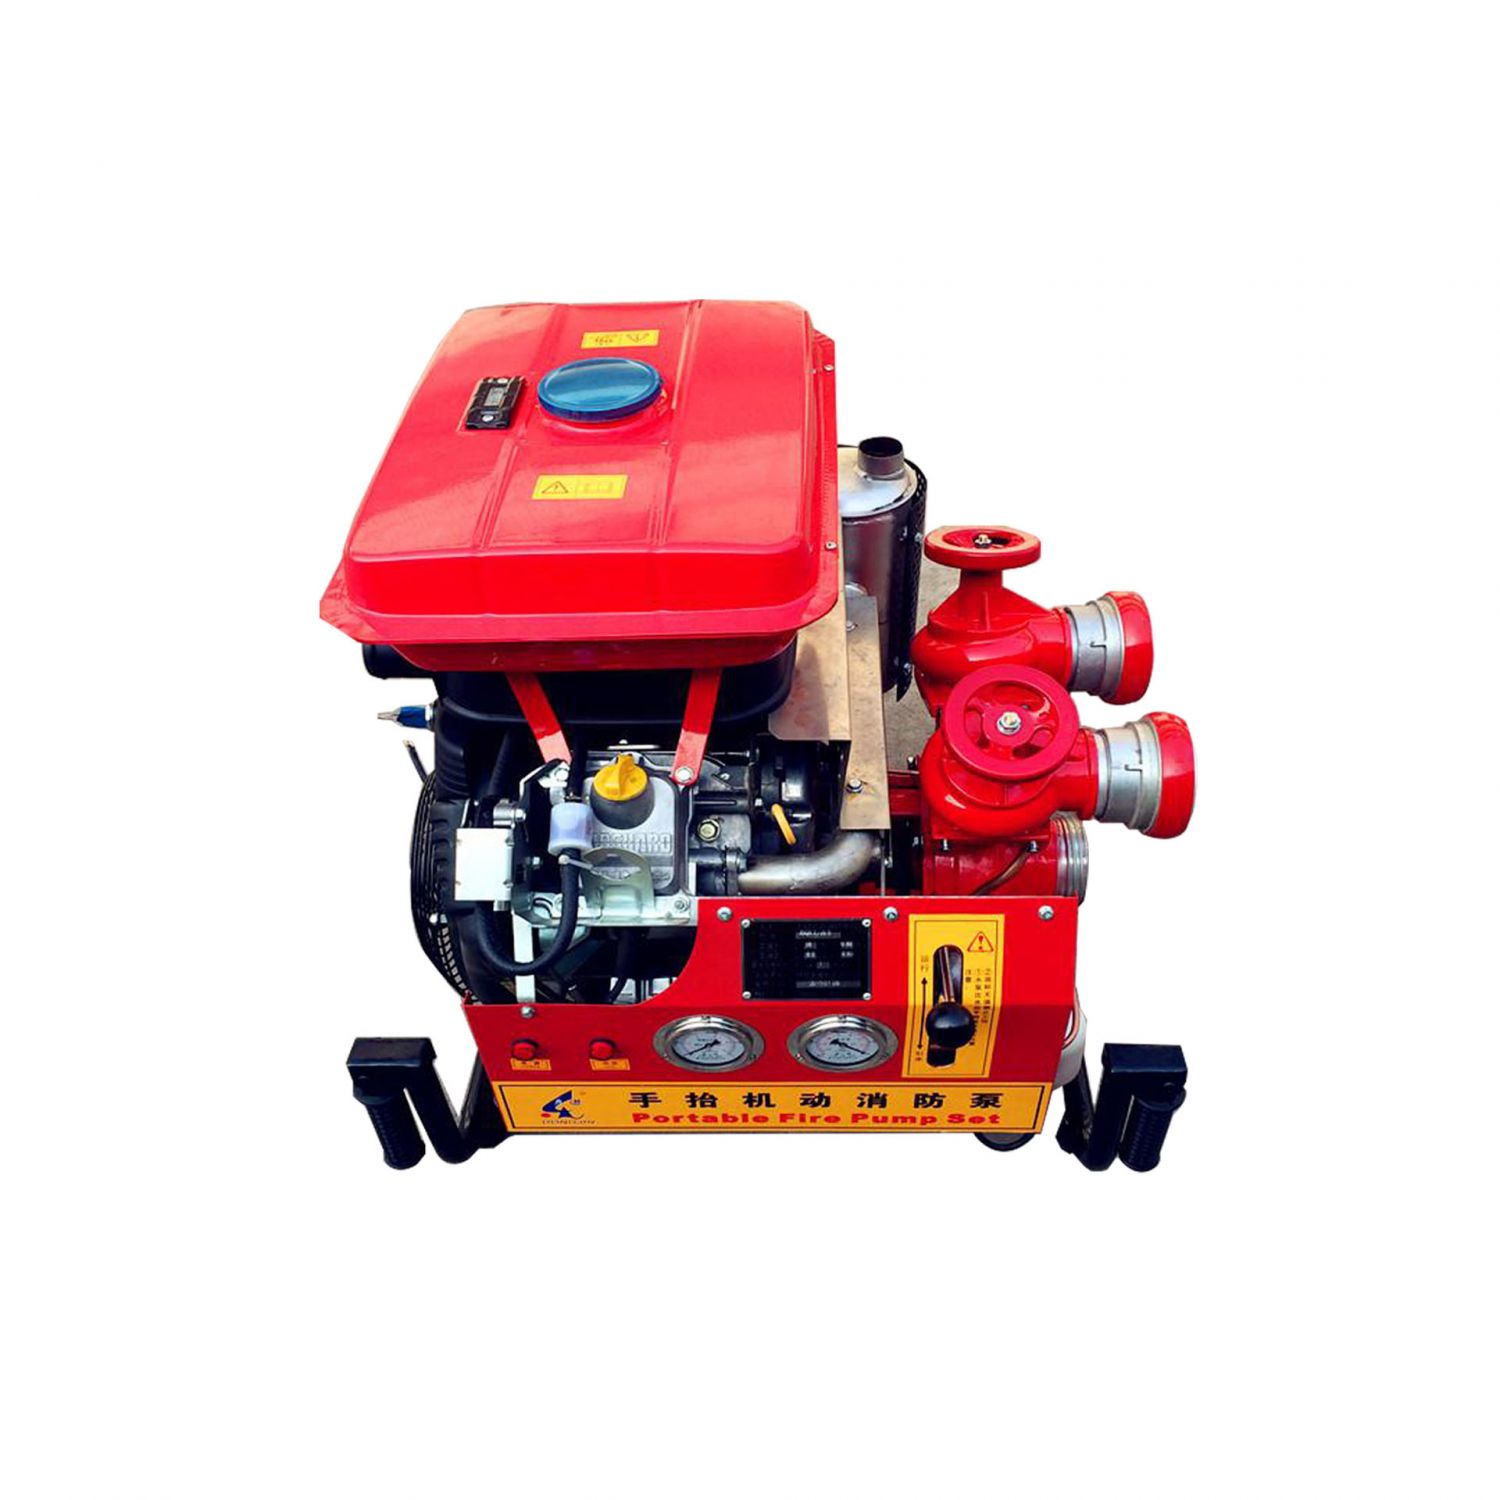 Portable gasoline fire pump